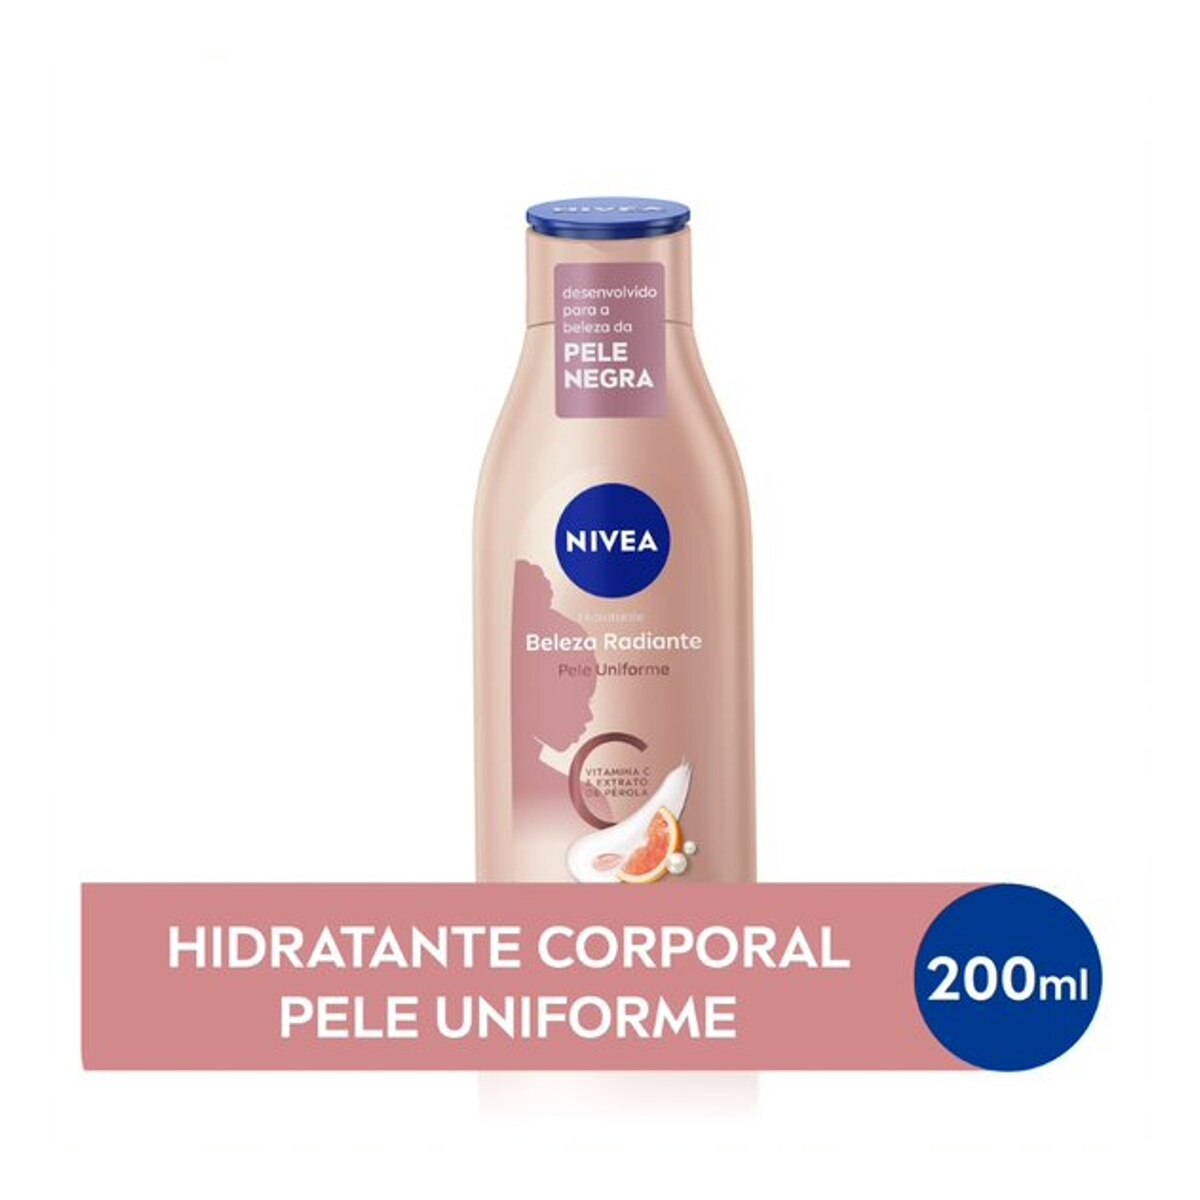 Hidratante Corporal Nivea Beleza Radiante Pele Uniforme para Pele Negra 200ml